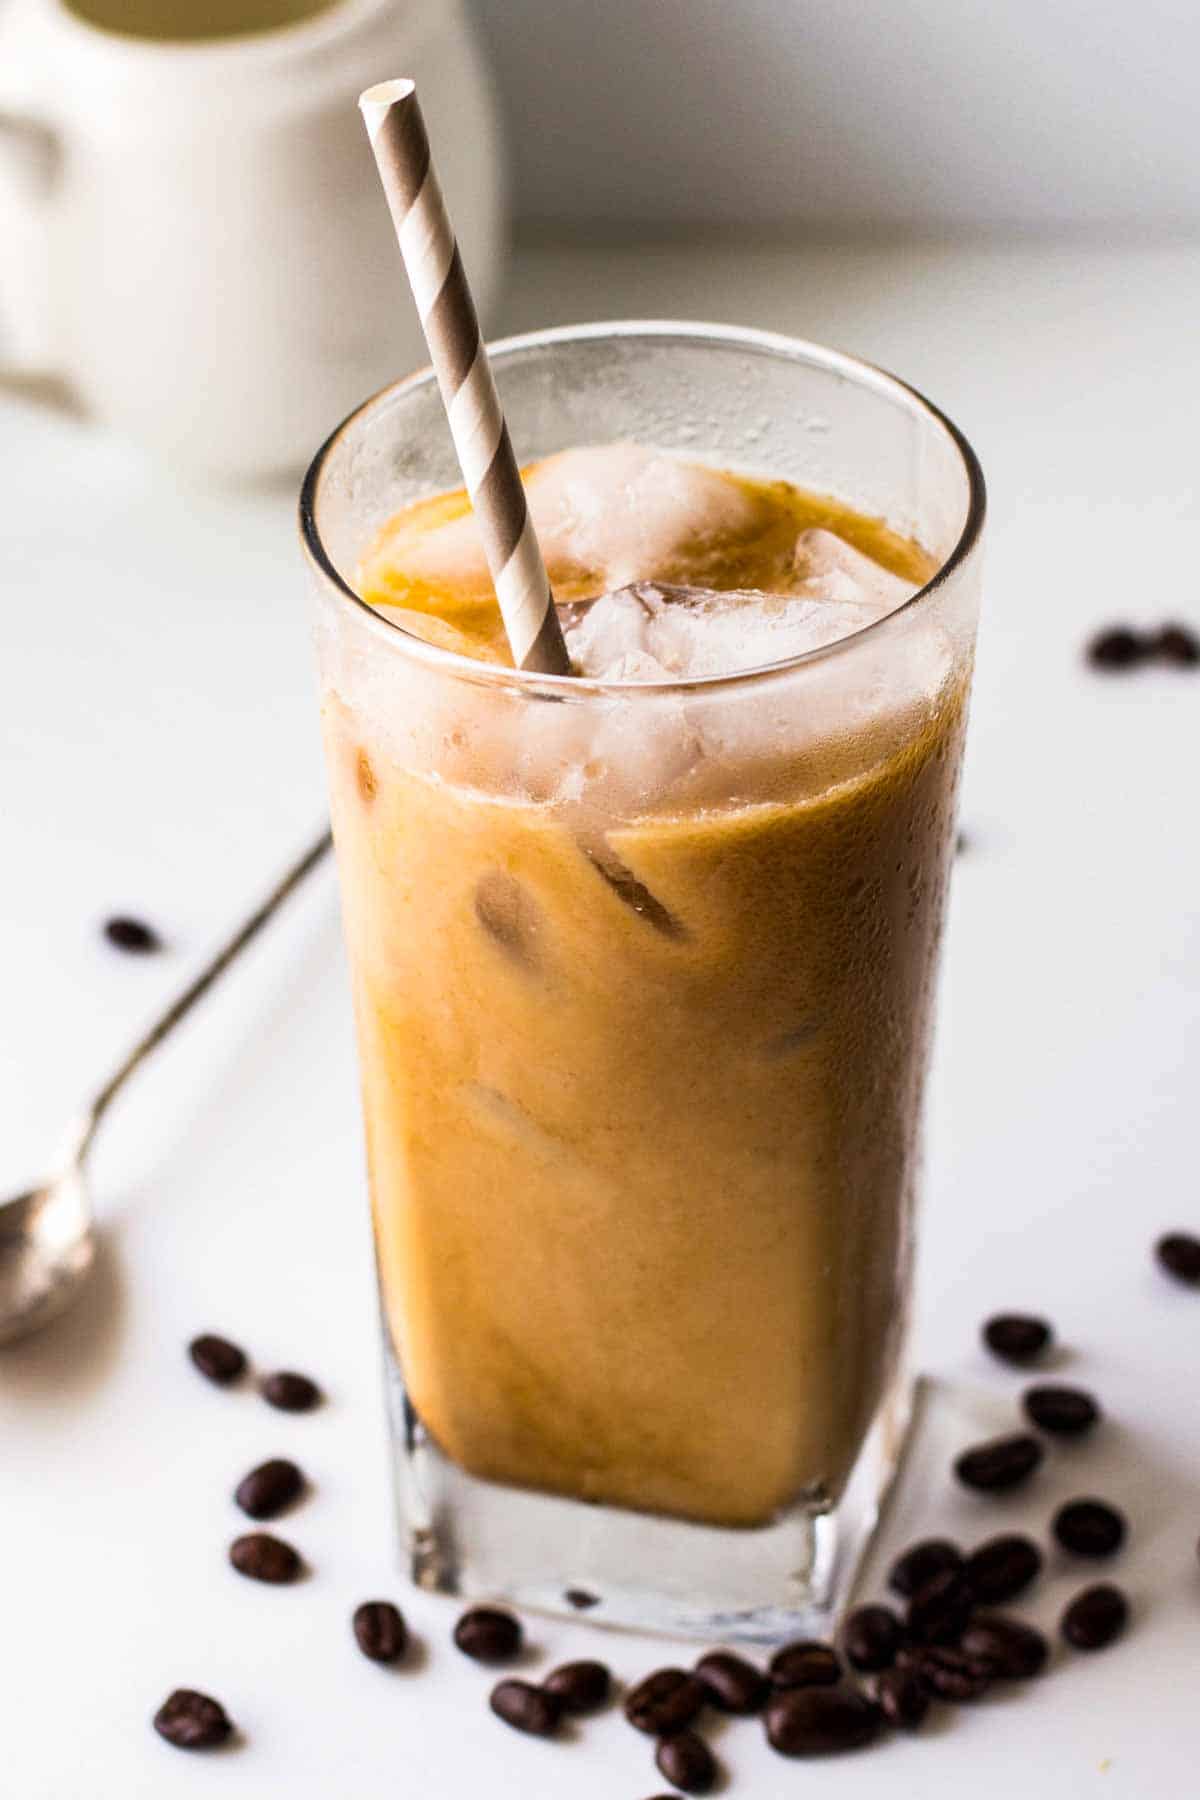 Easy Iced Coffee Recipe